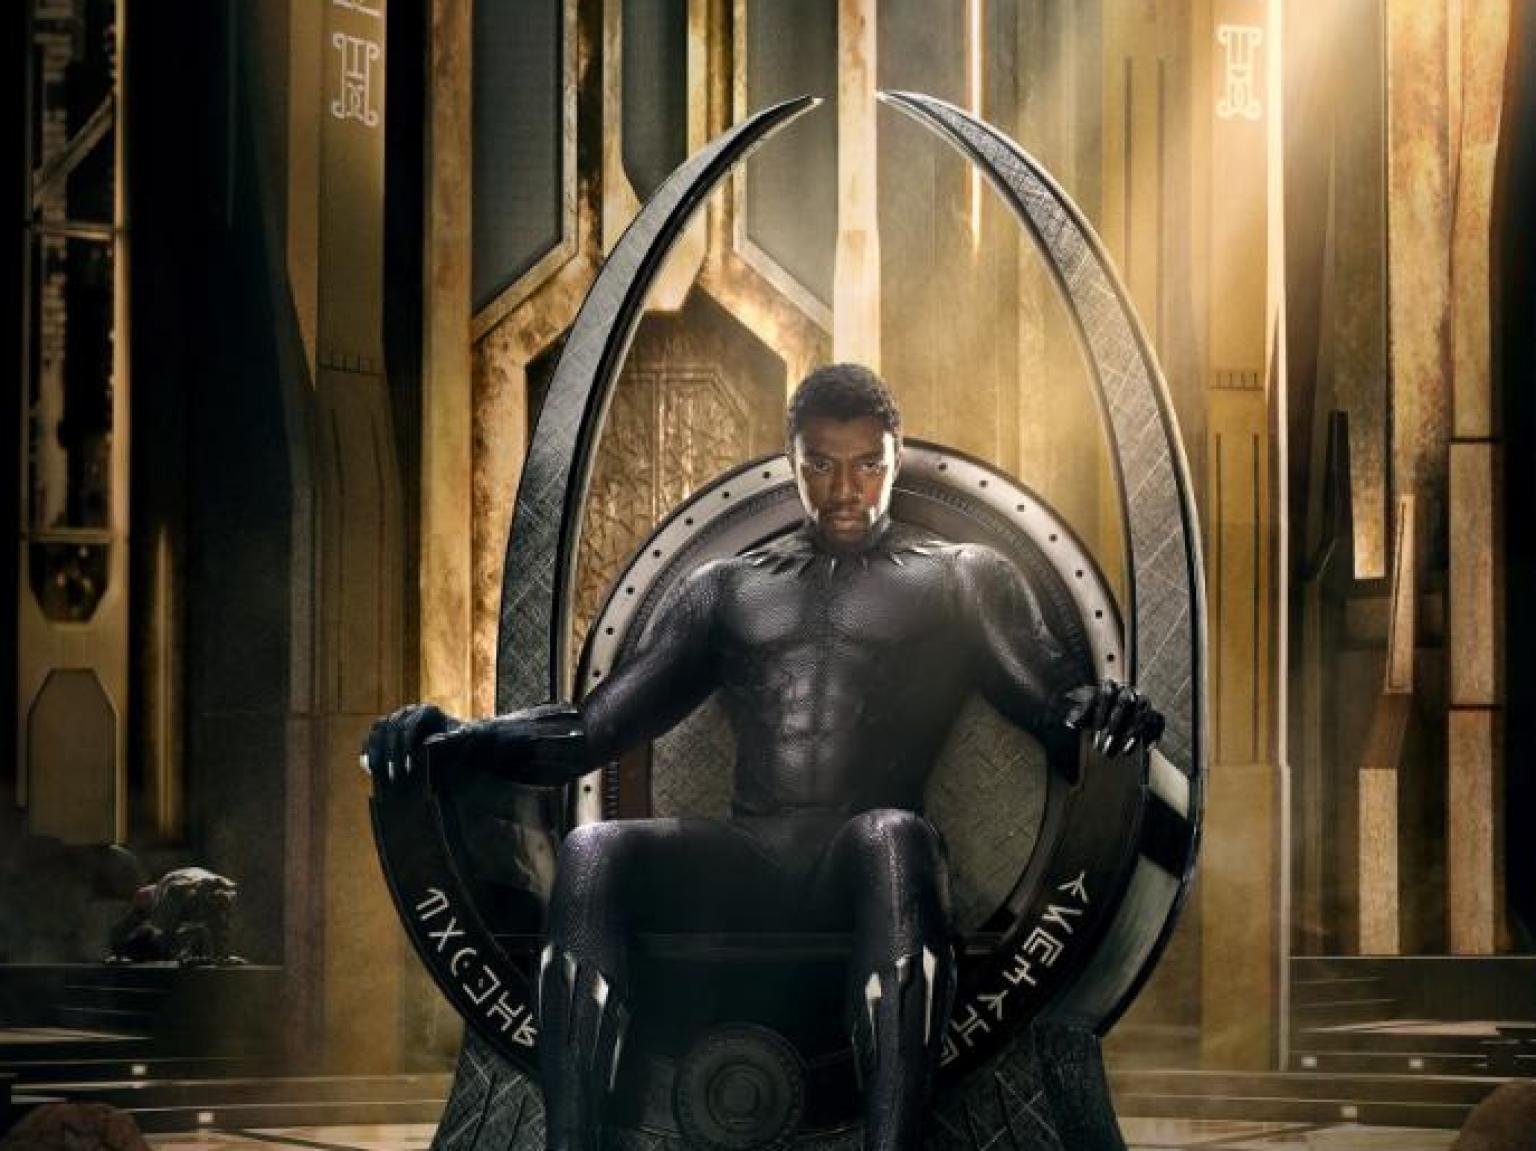 Marvel Studios’ Black Panther